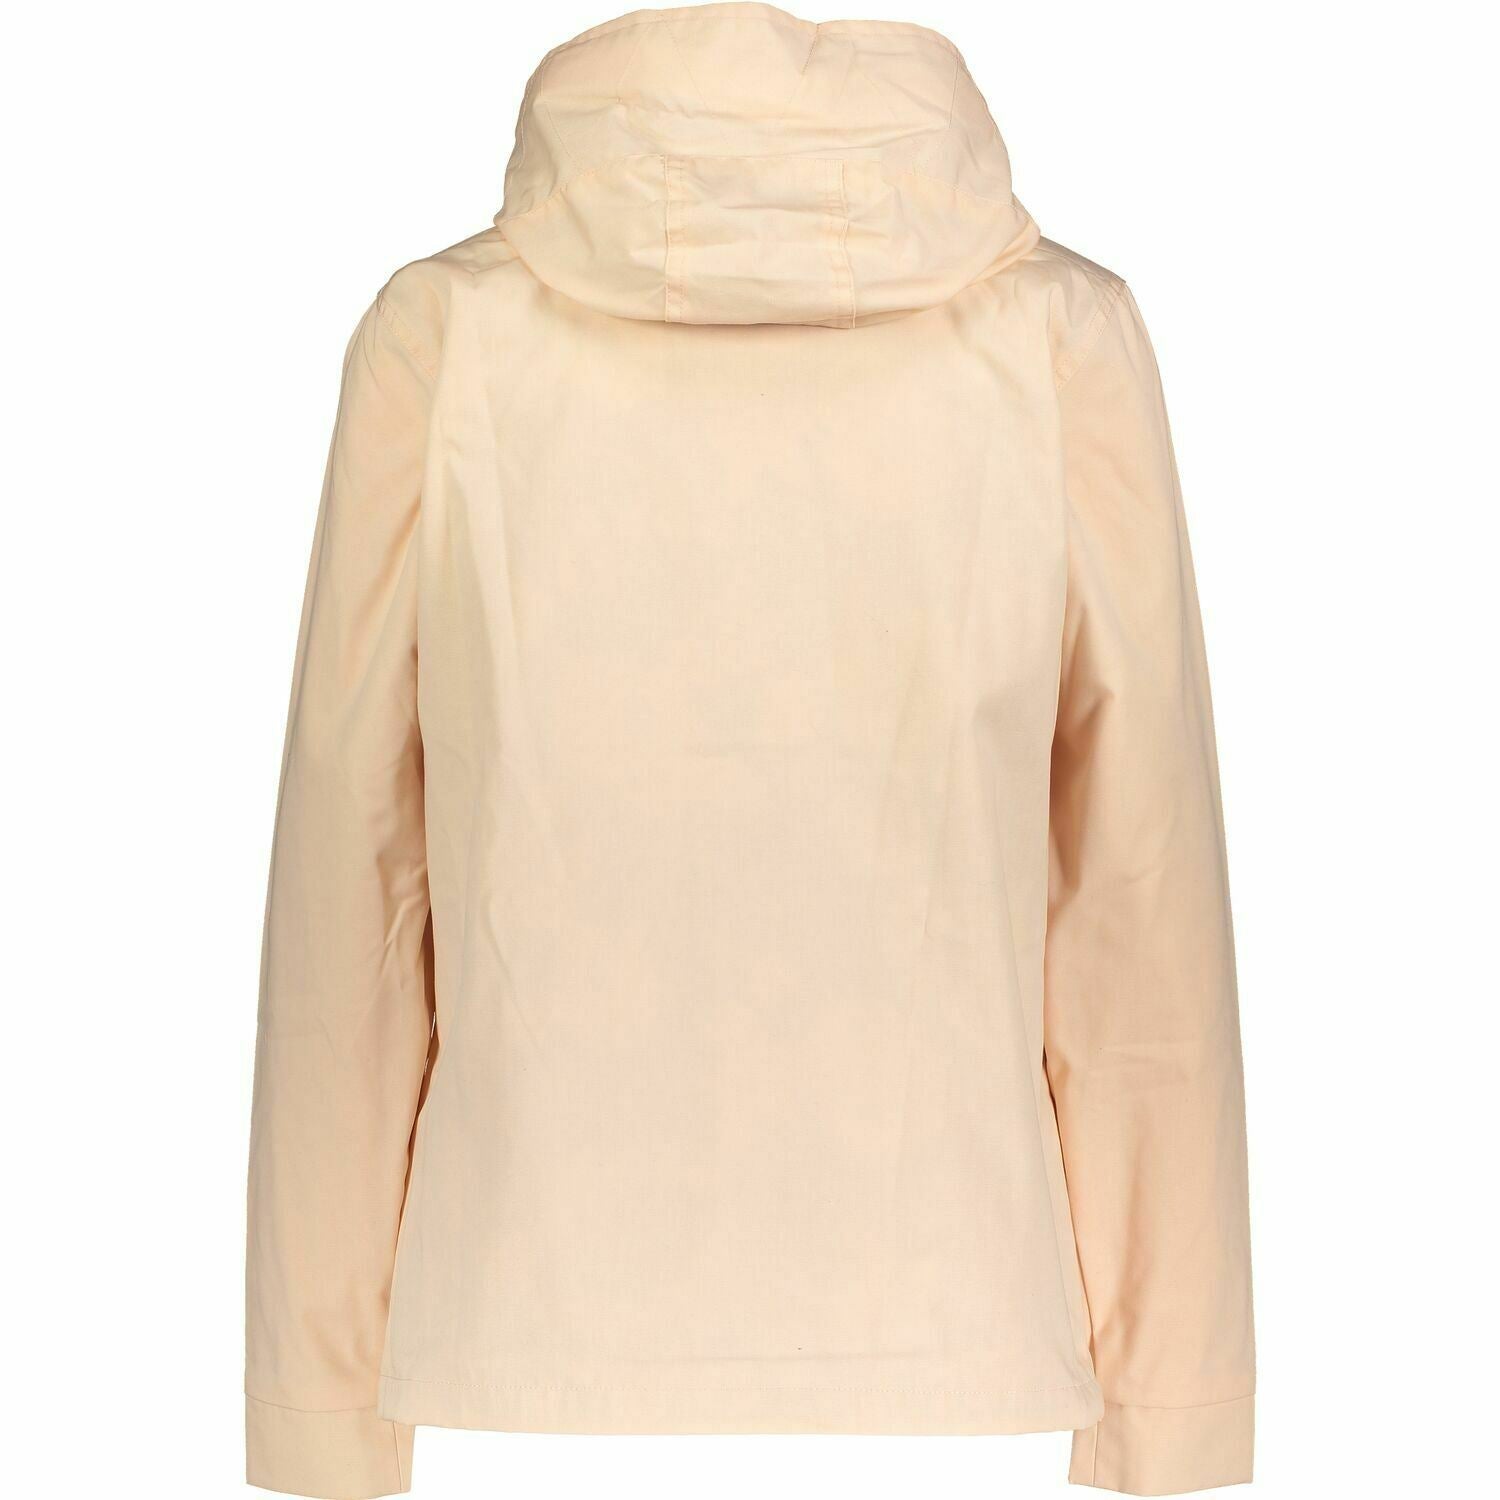 Billabong Women's Hooded Parka Jacket, Nude/Peach, size XS